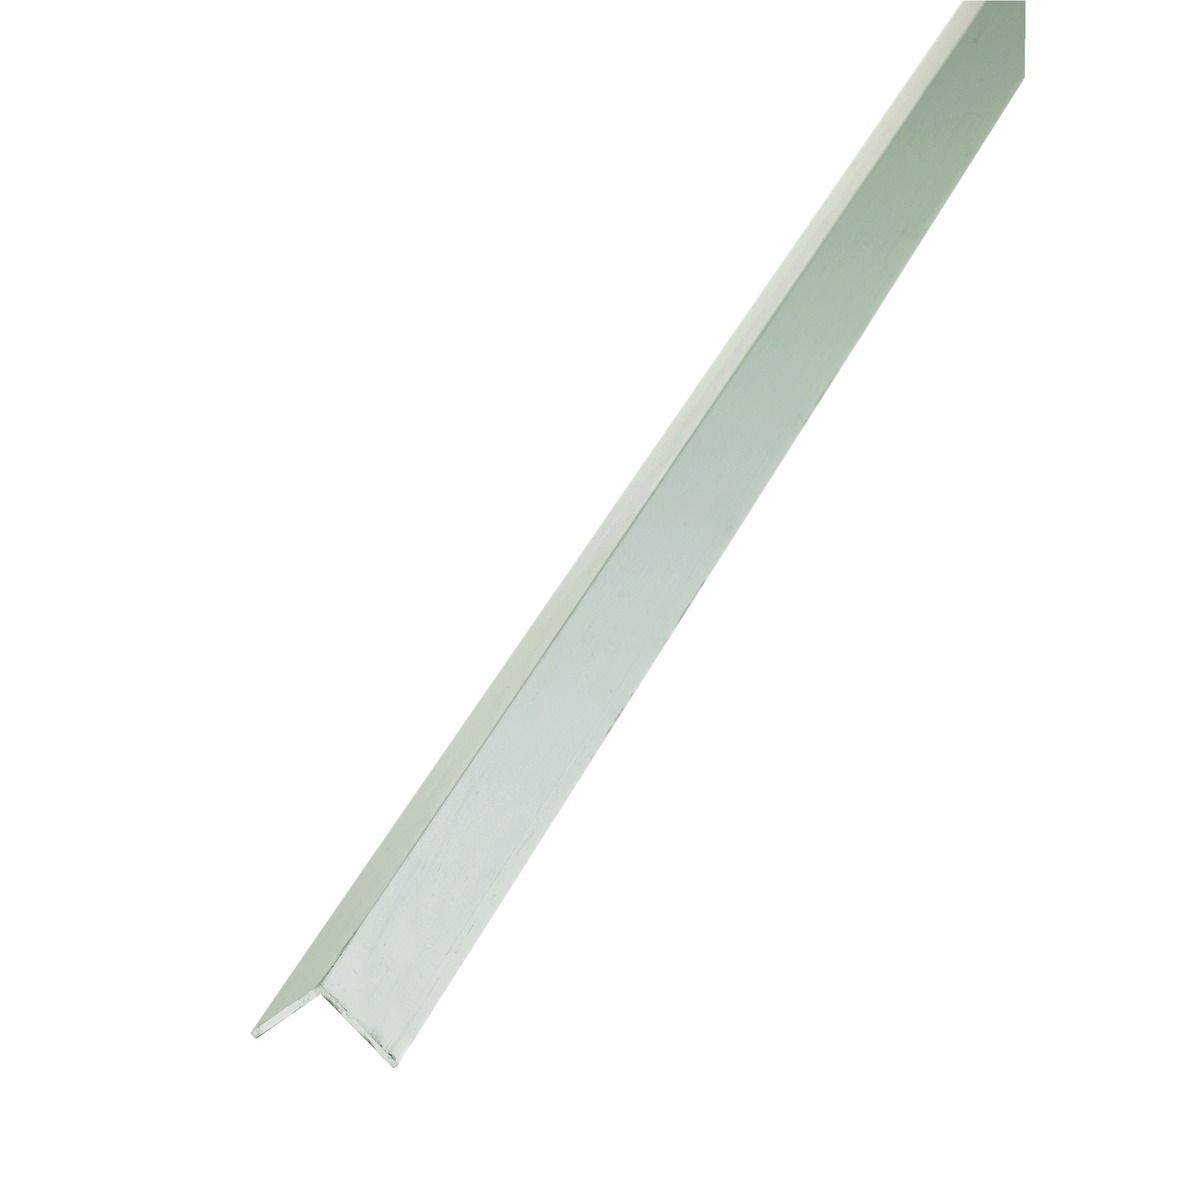 Image of Wickes Angle - Anodised Aluminium 20 x 30mm x 2m